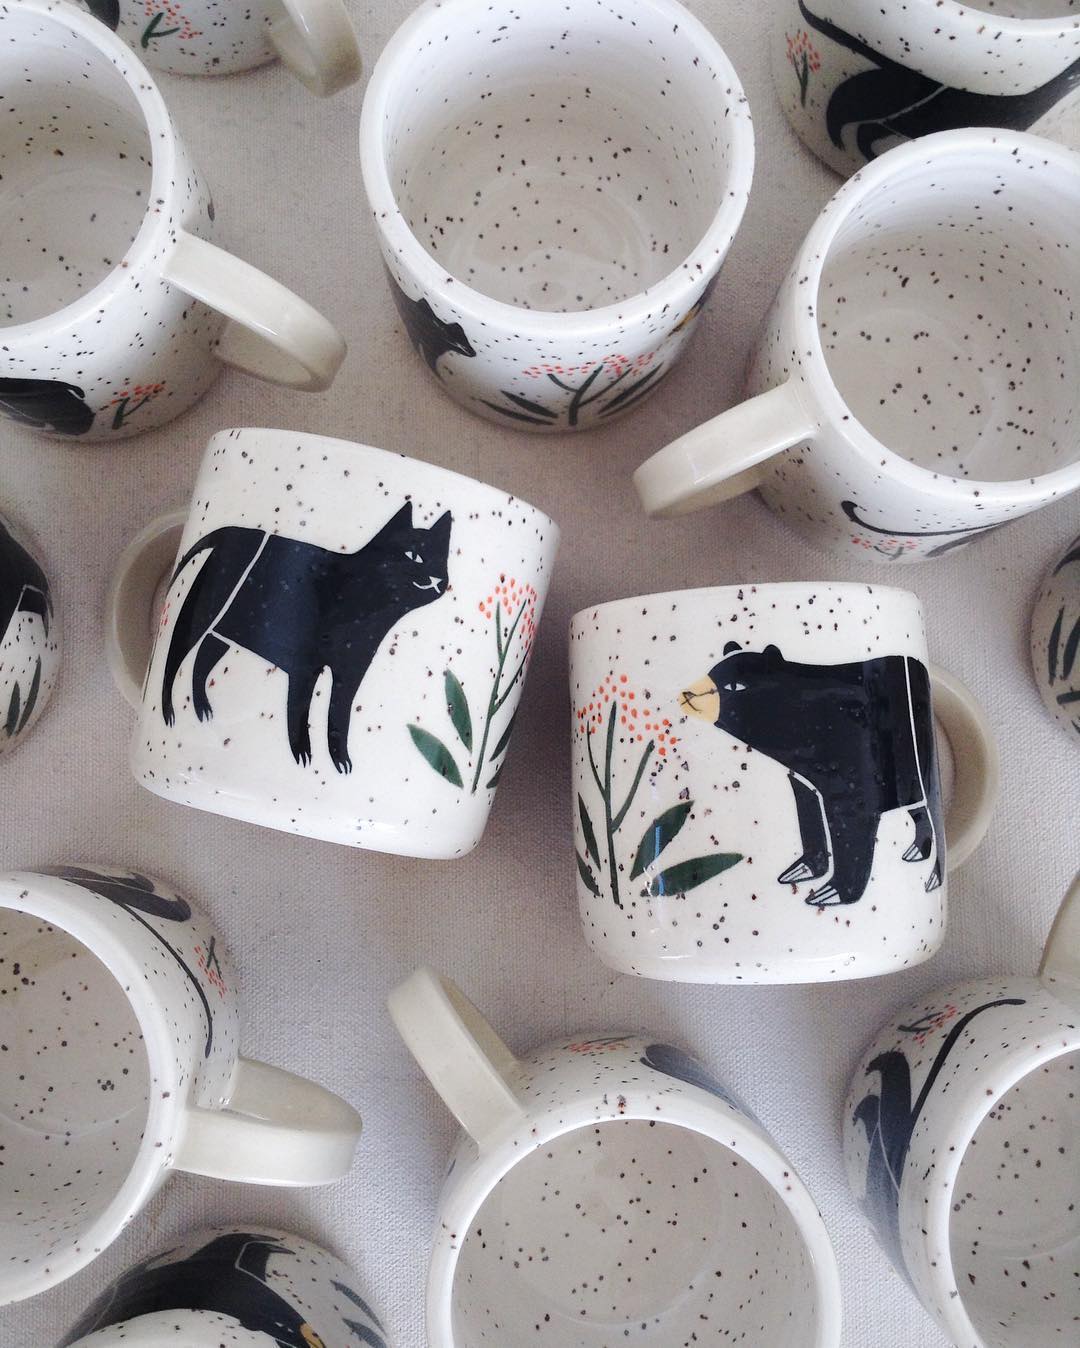 Jenn Collins ceramic art